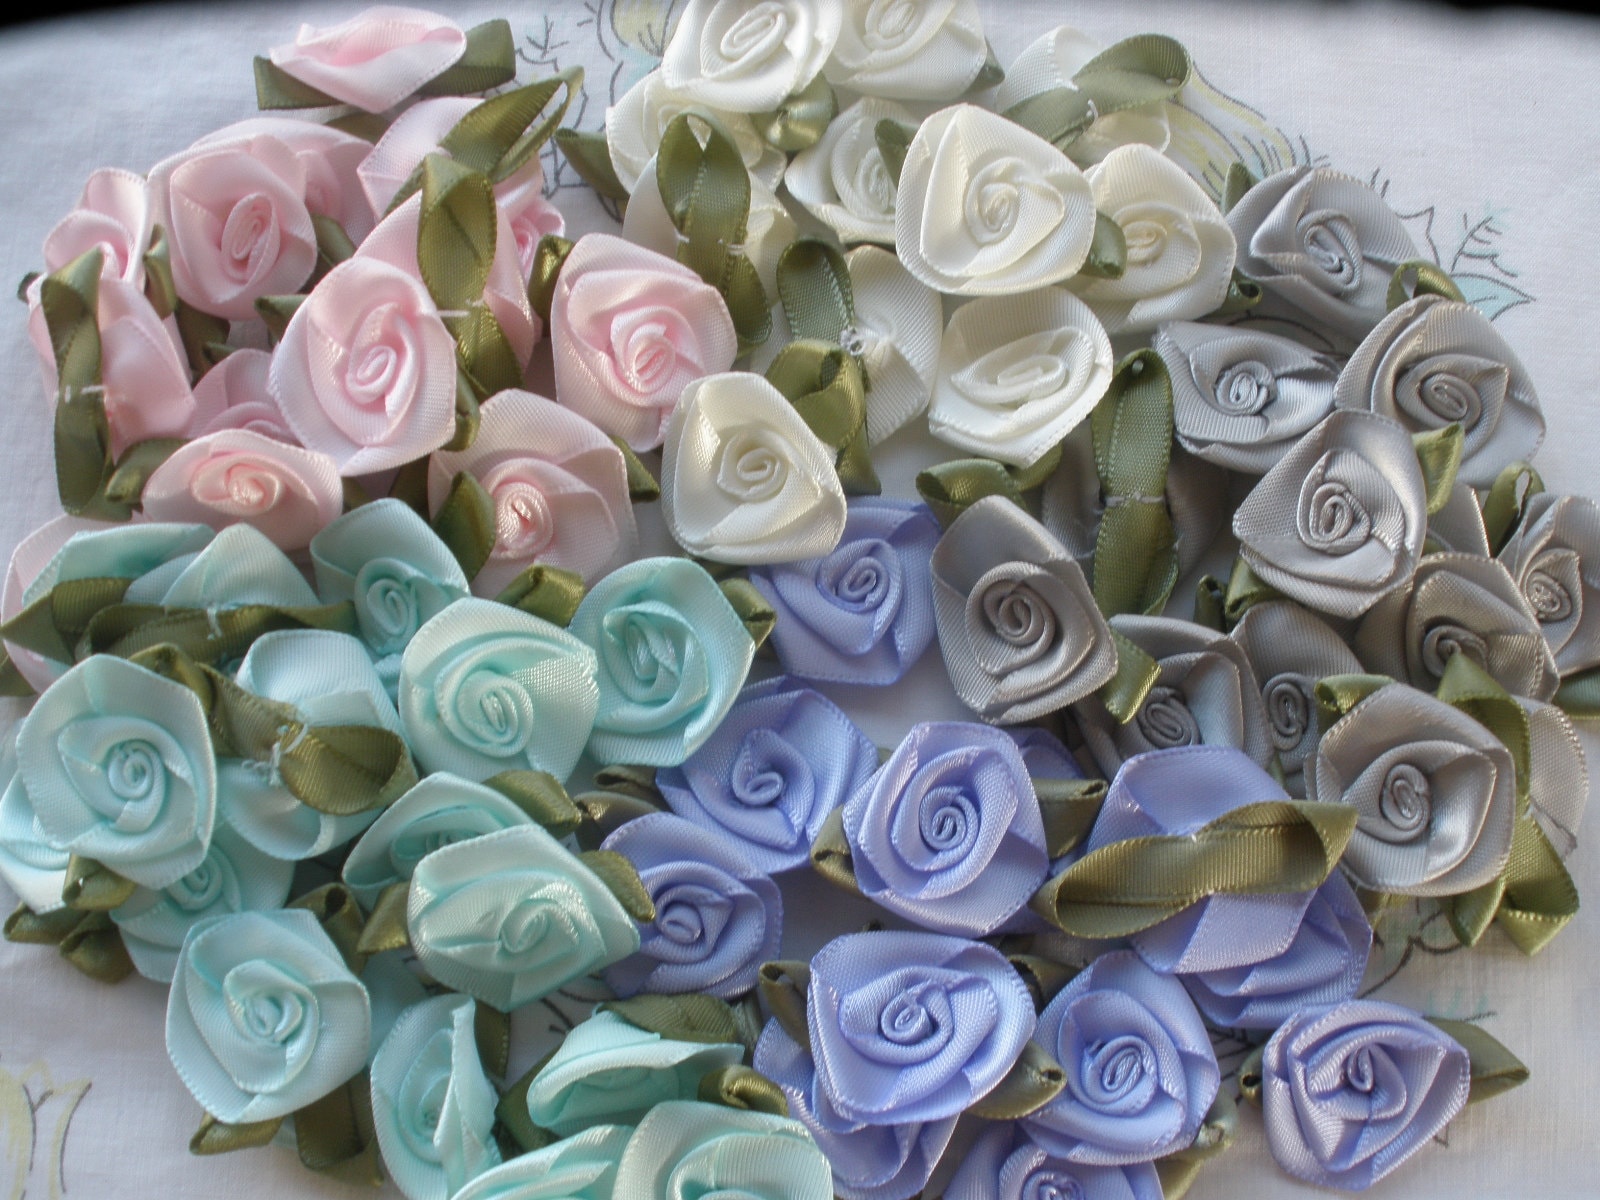 24 Mini Ribbon Flower BOWS 1" Craft Supplies Embellishment Pink/Green/White 